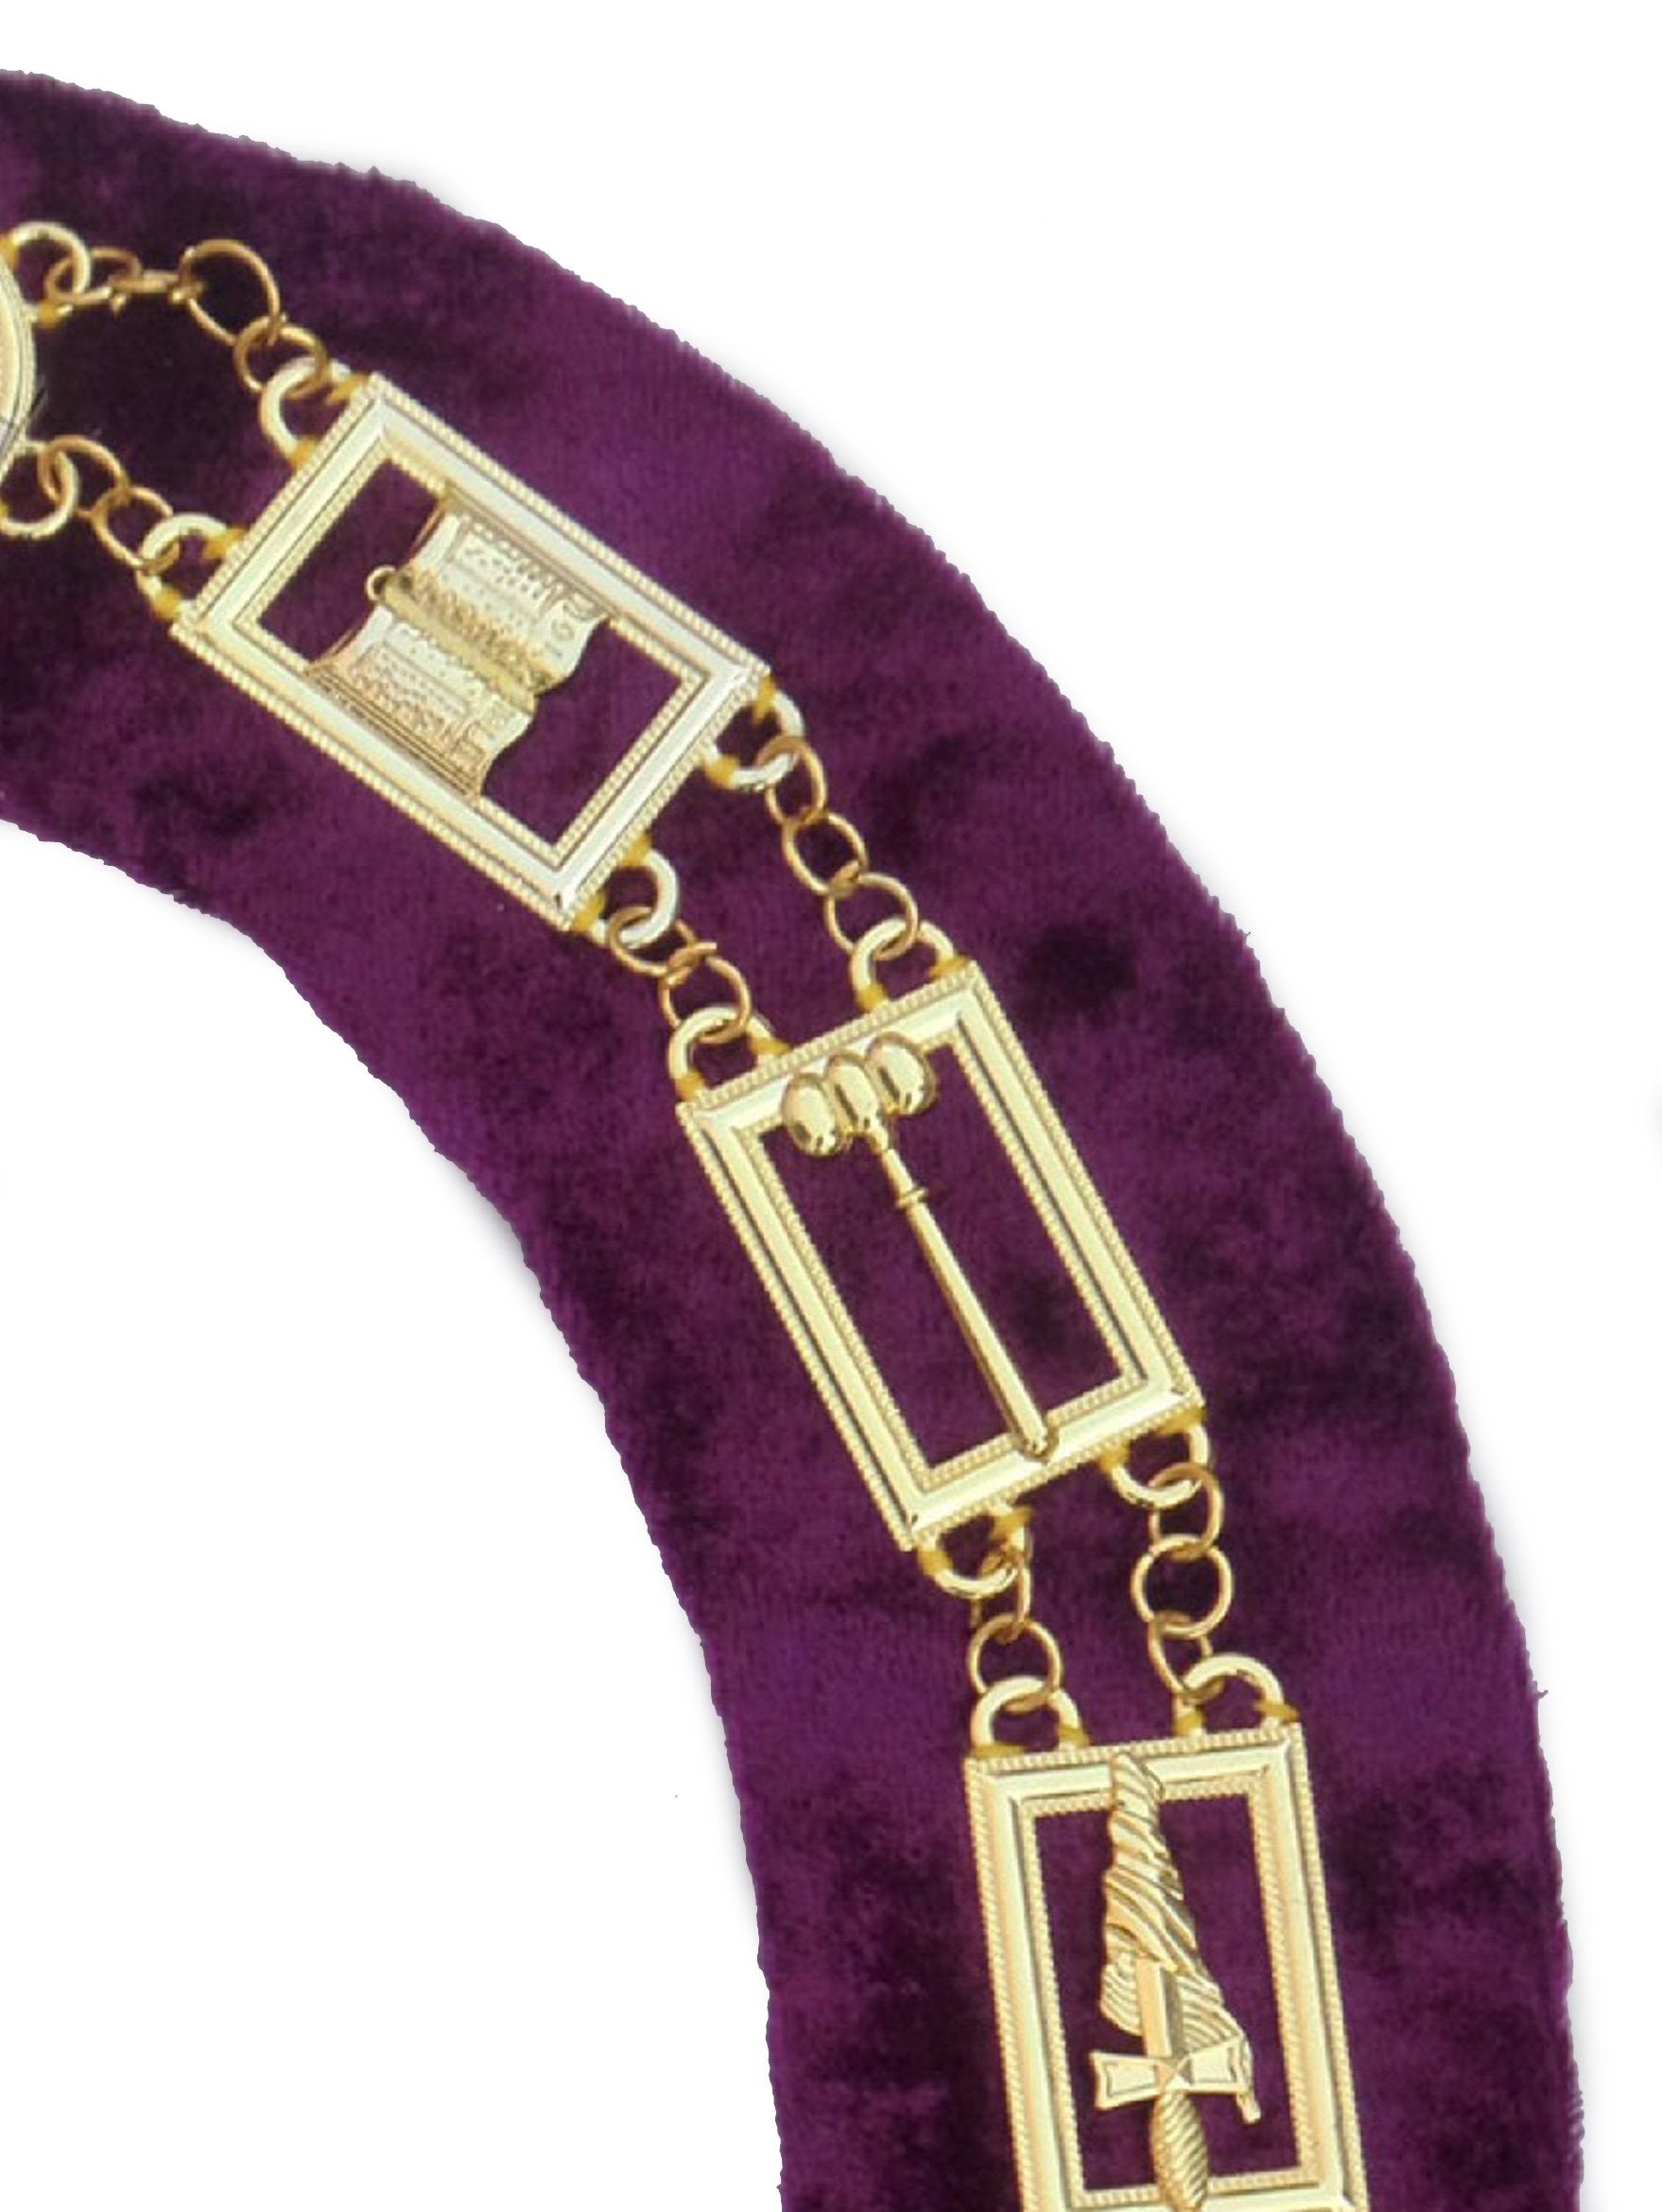 OES Chain Collar - Gold Plated on Purple Velvet - Bricks Masons